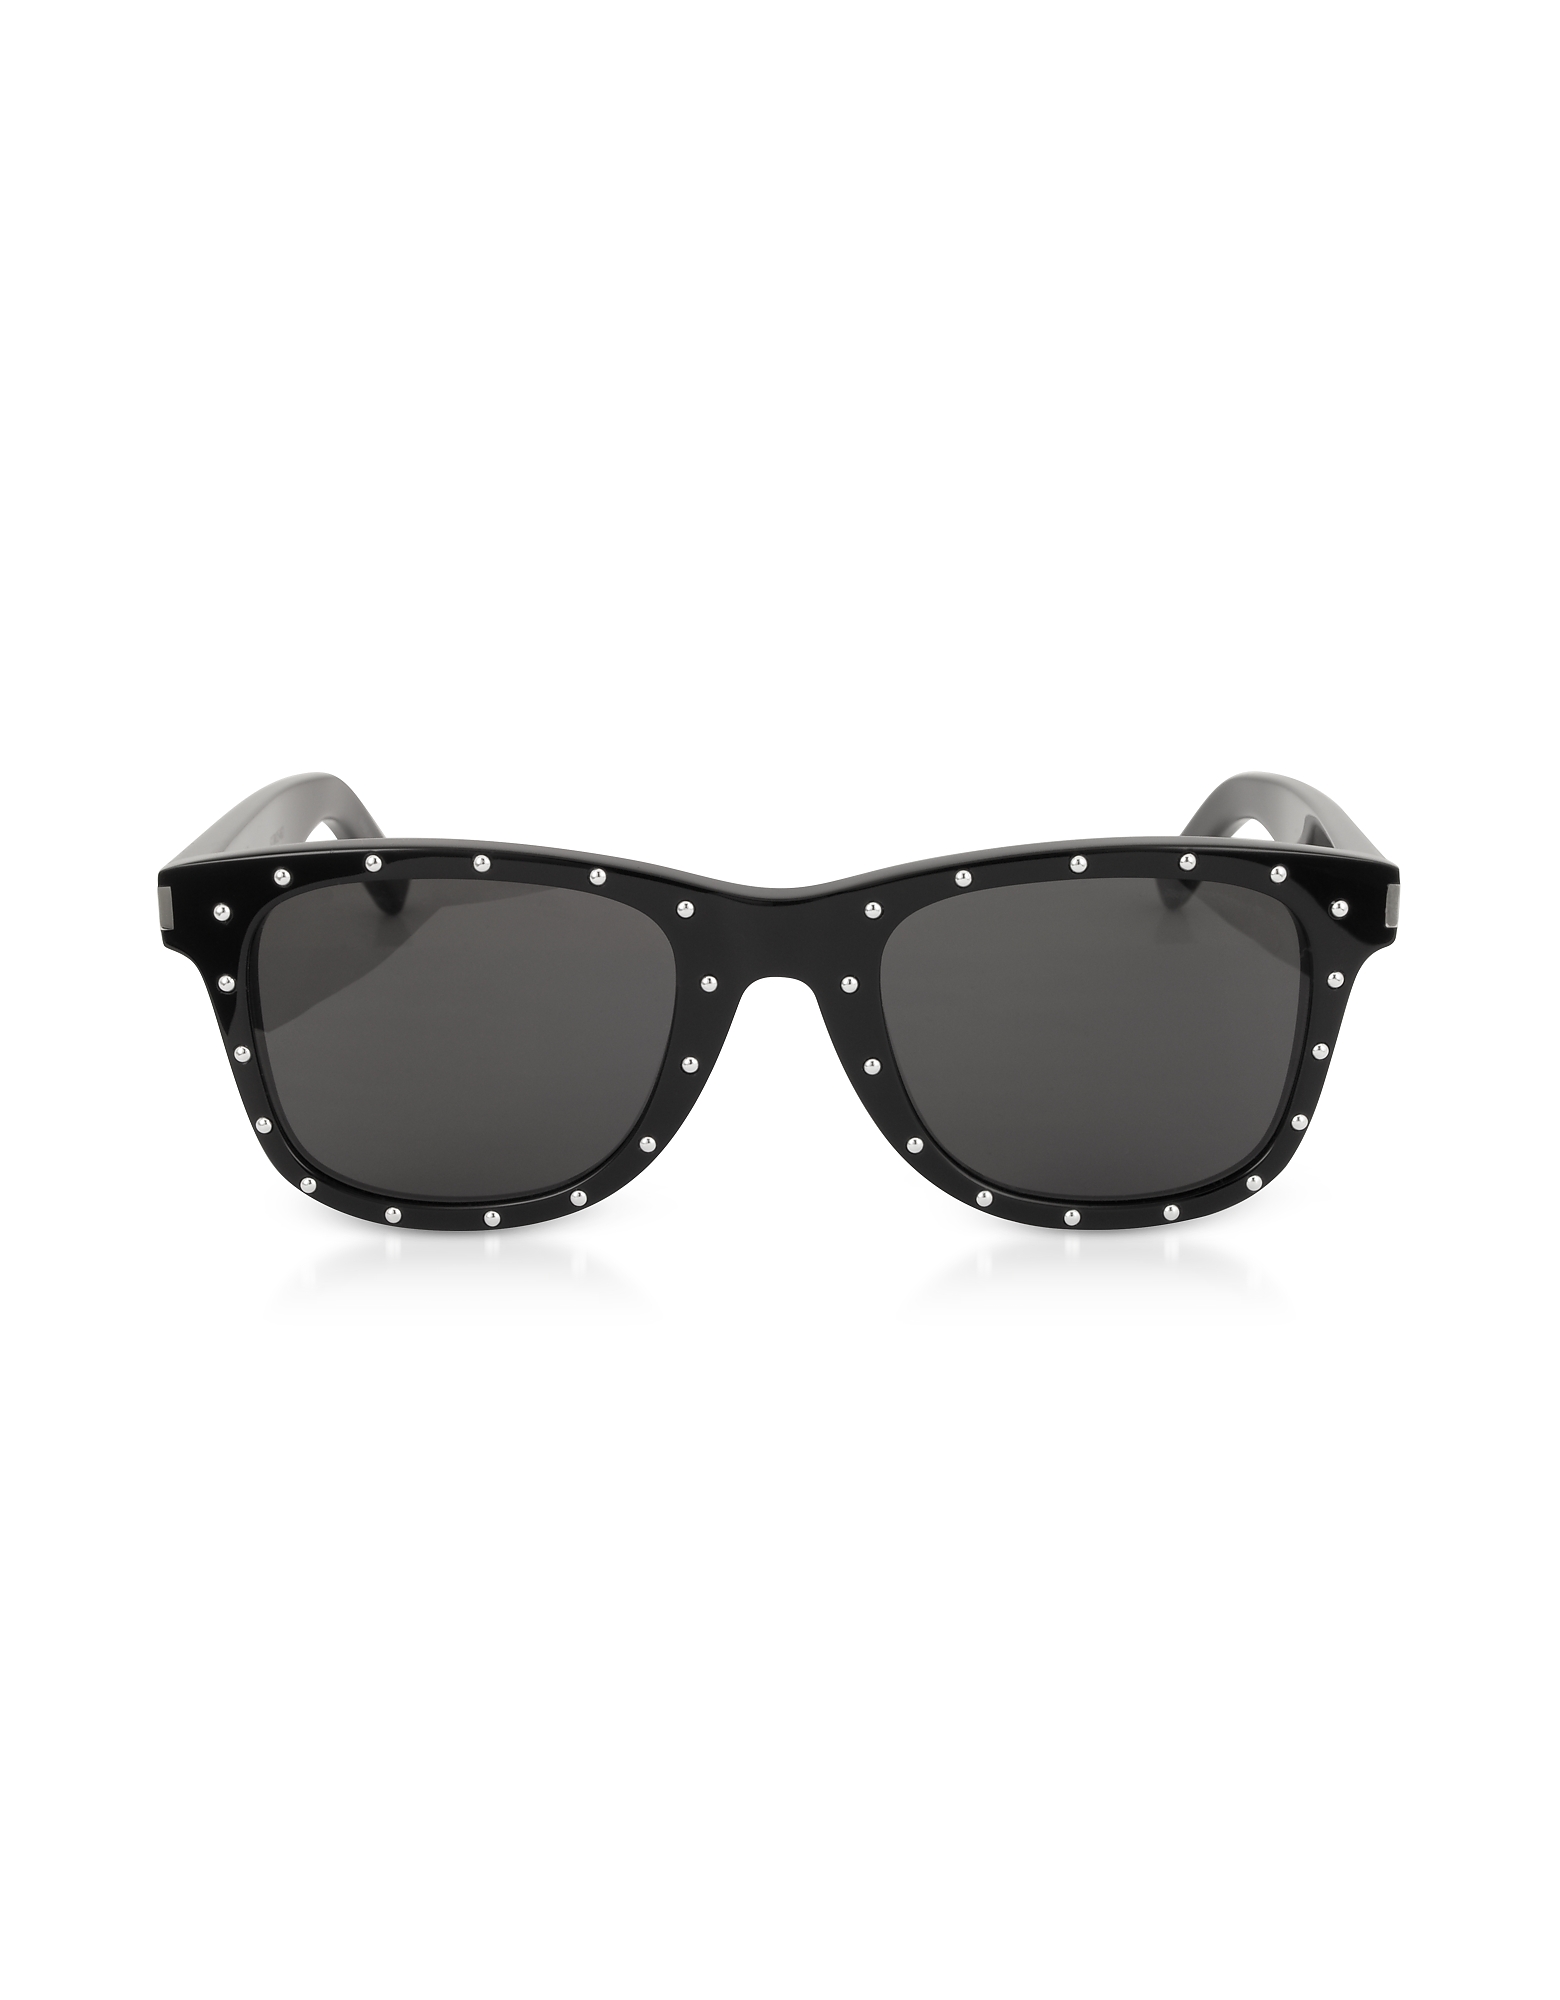 Saint Laurent Sunglasses SL 51-029 Black Studded Acetate Women's Sunglasses